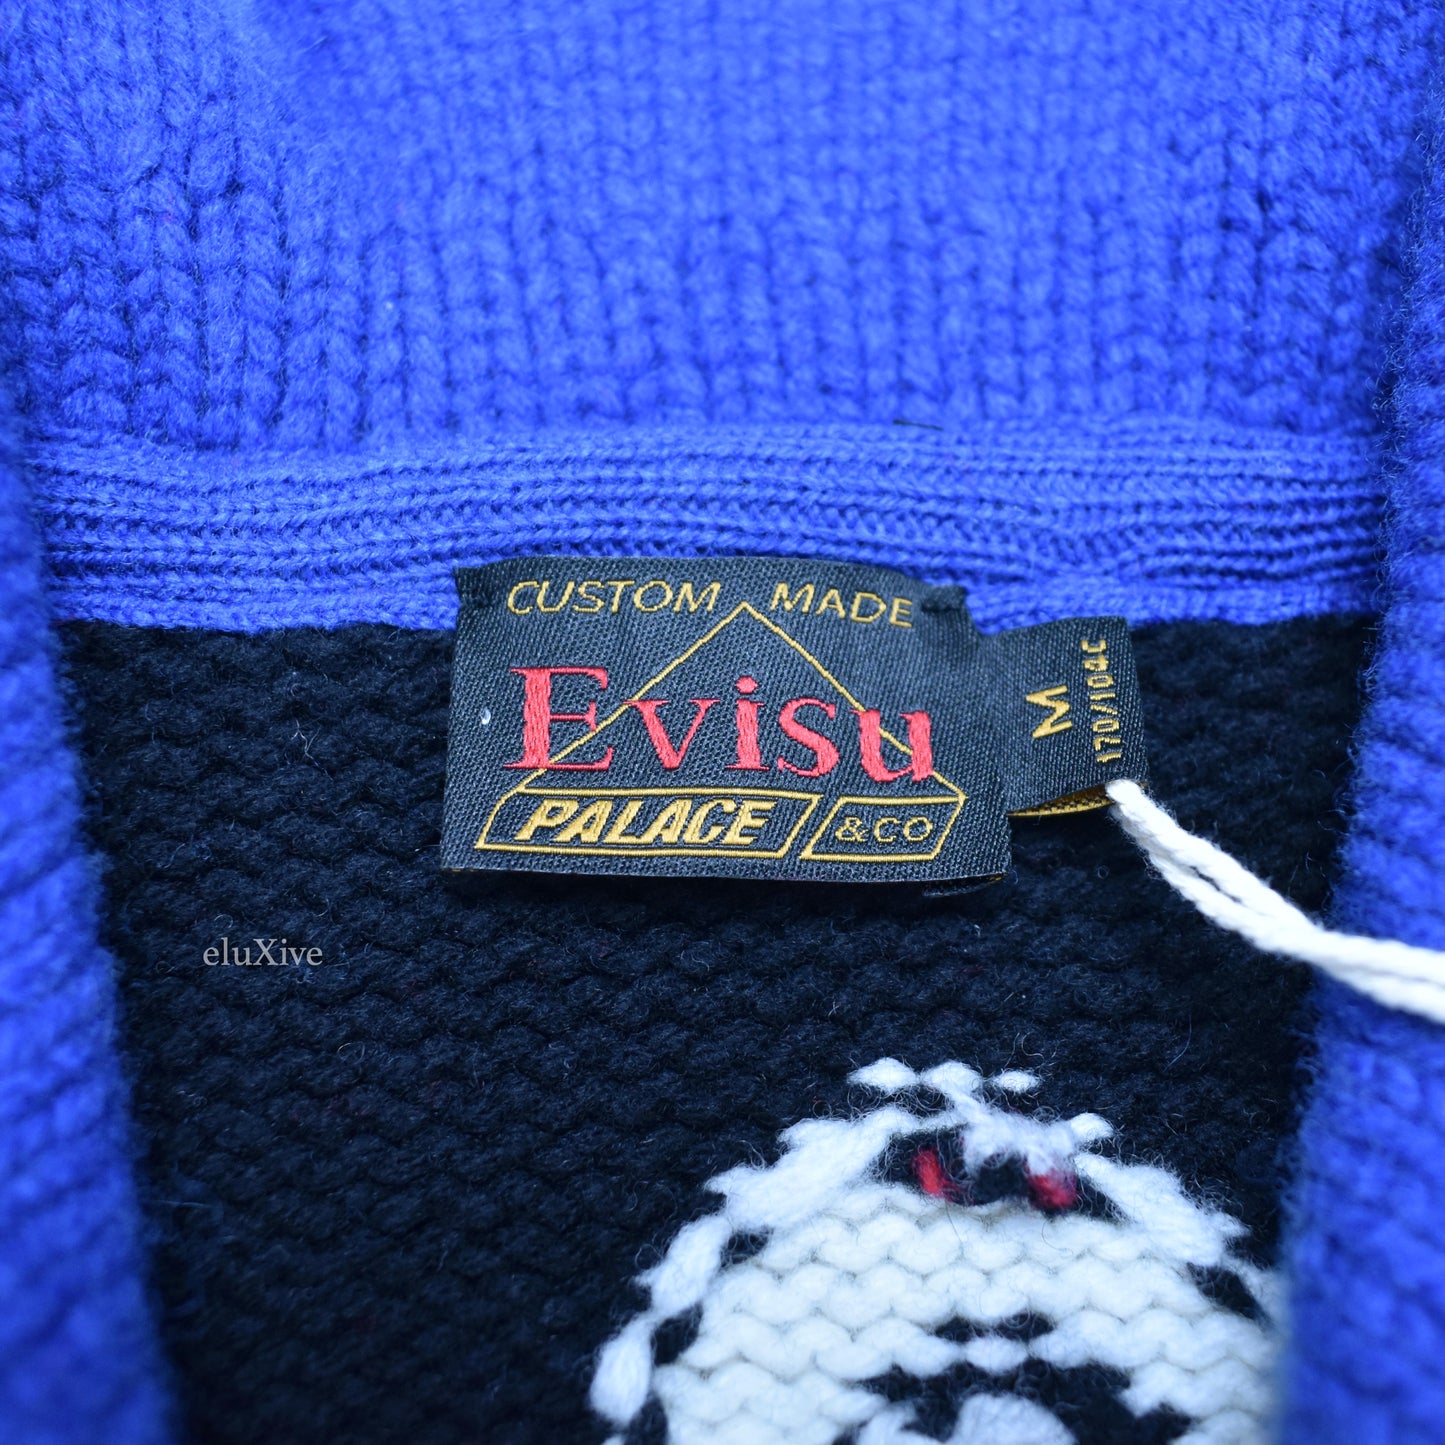 Palace x Evisu - Intarsia Knit Logo Cowichan Sweater